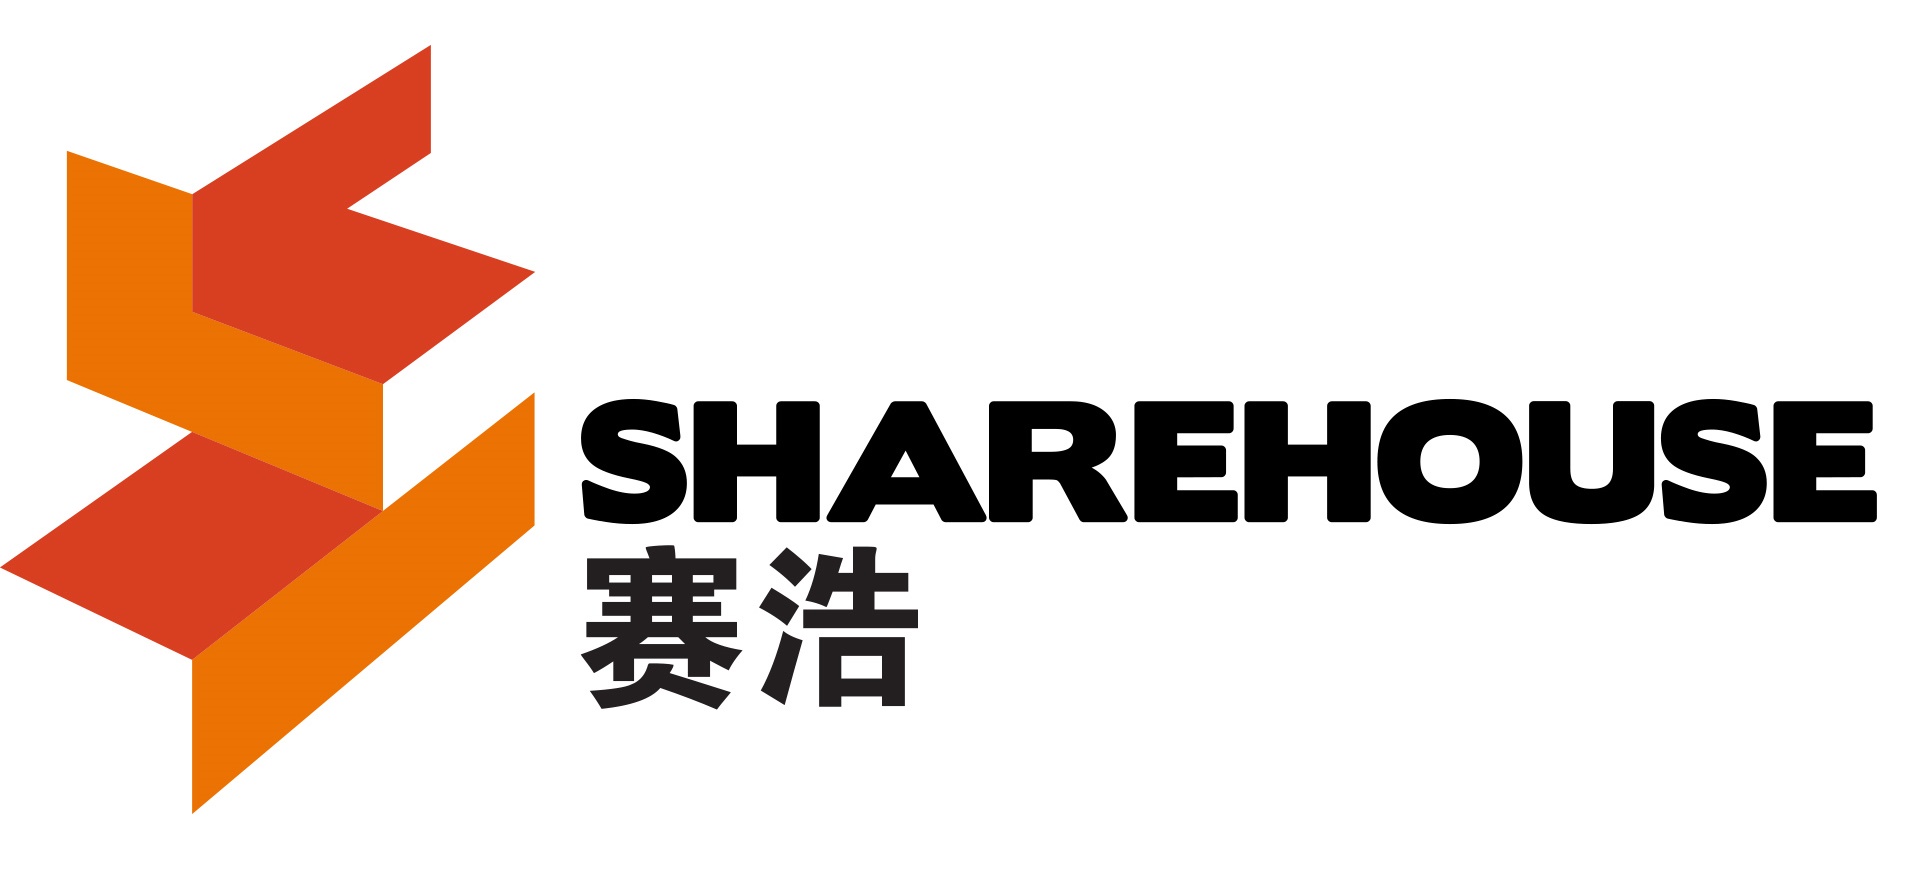 Sharehouse